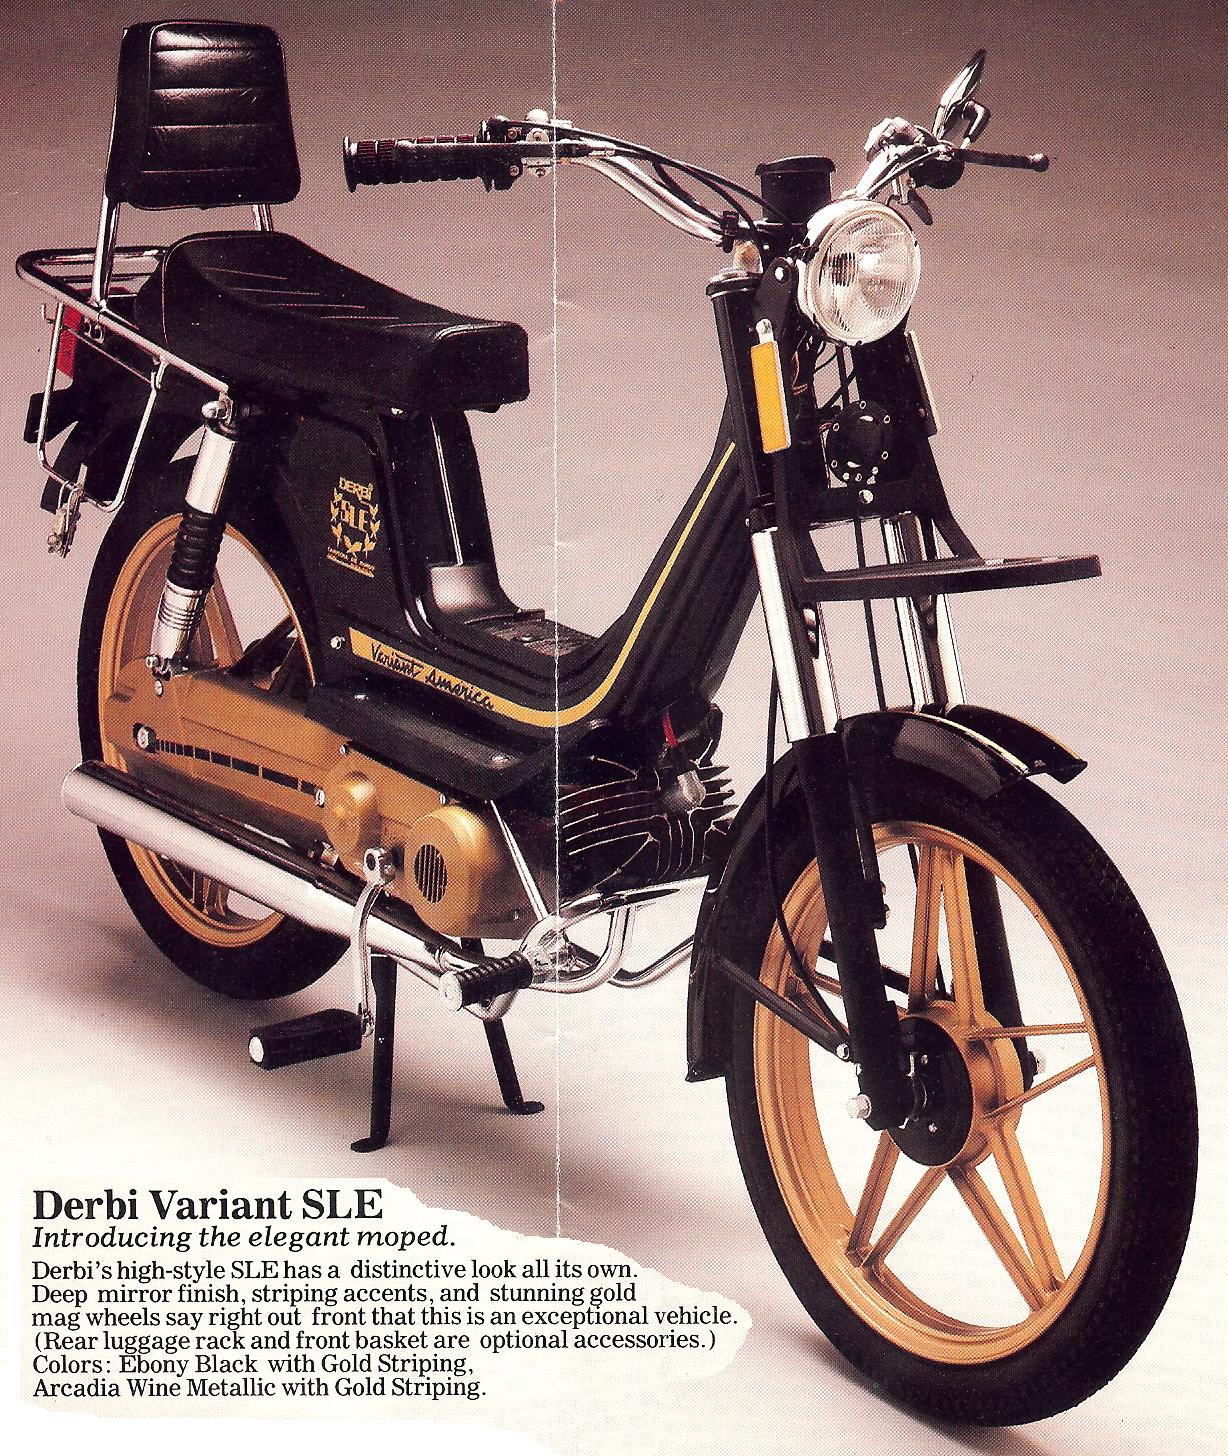 DERBI derbi-variant-sle-america Used - the parking motorcycles